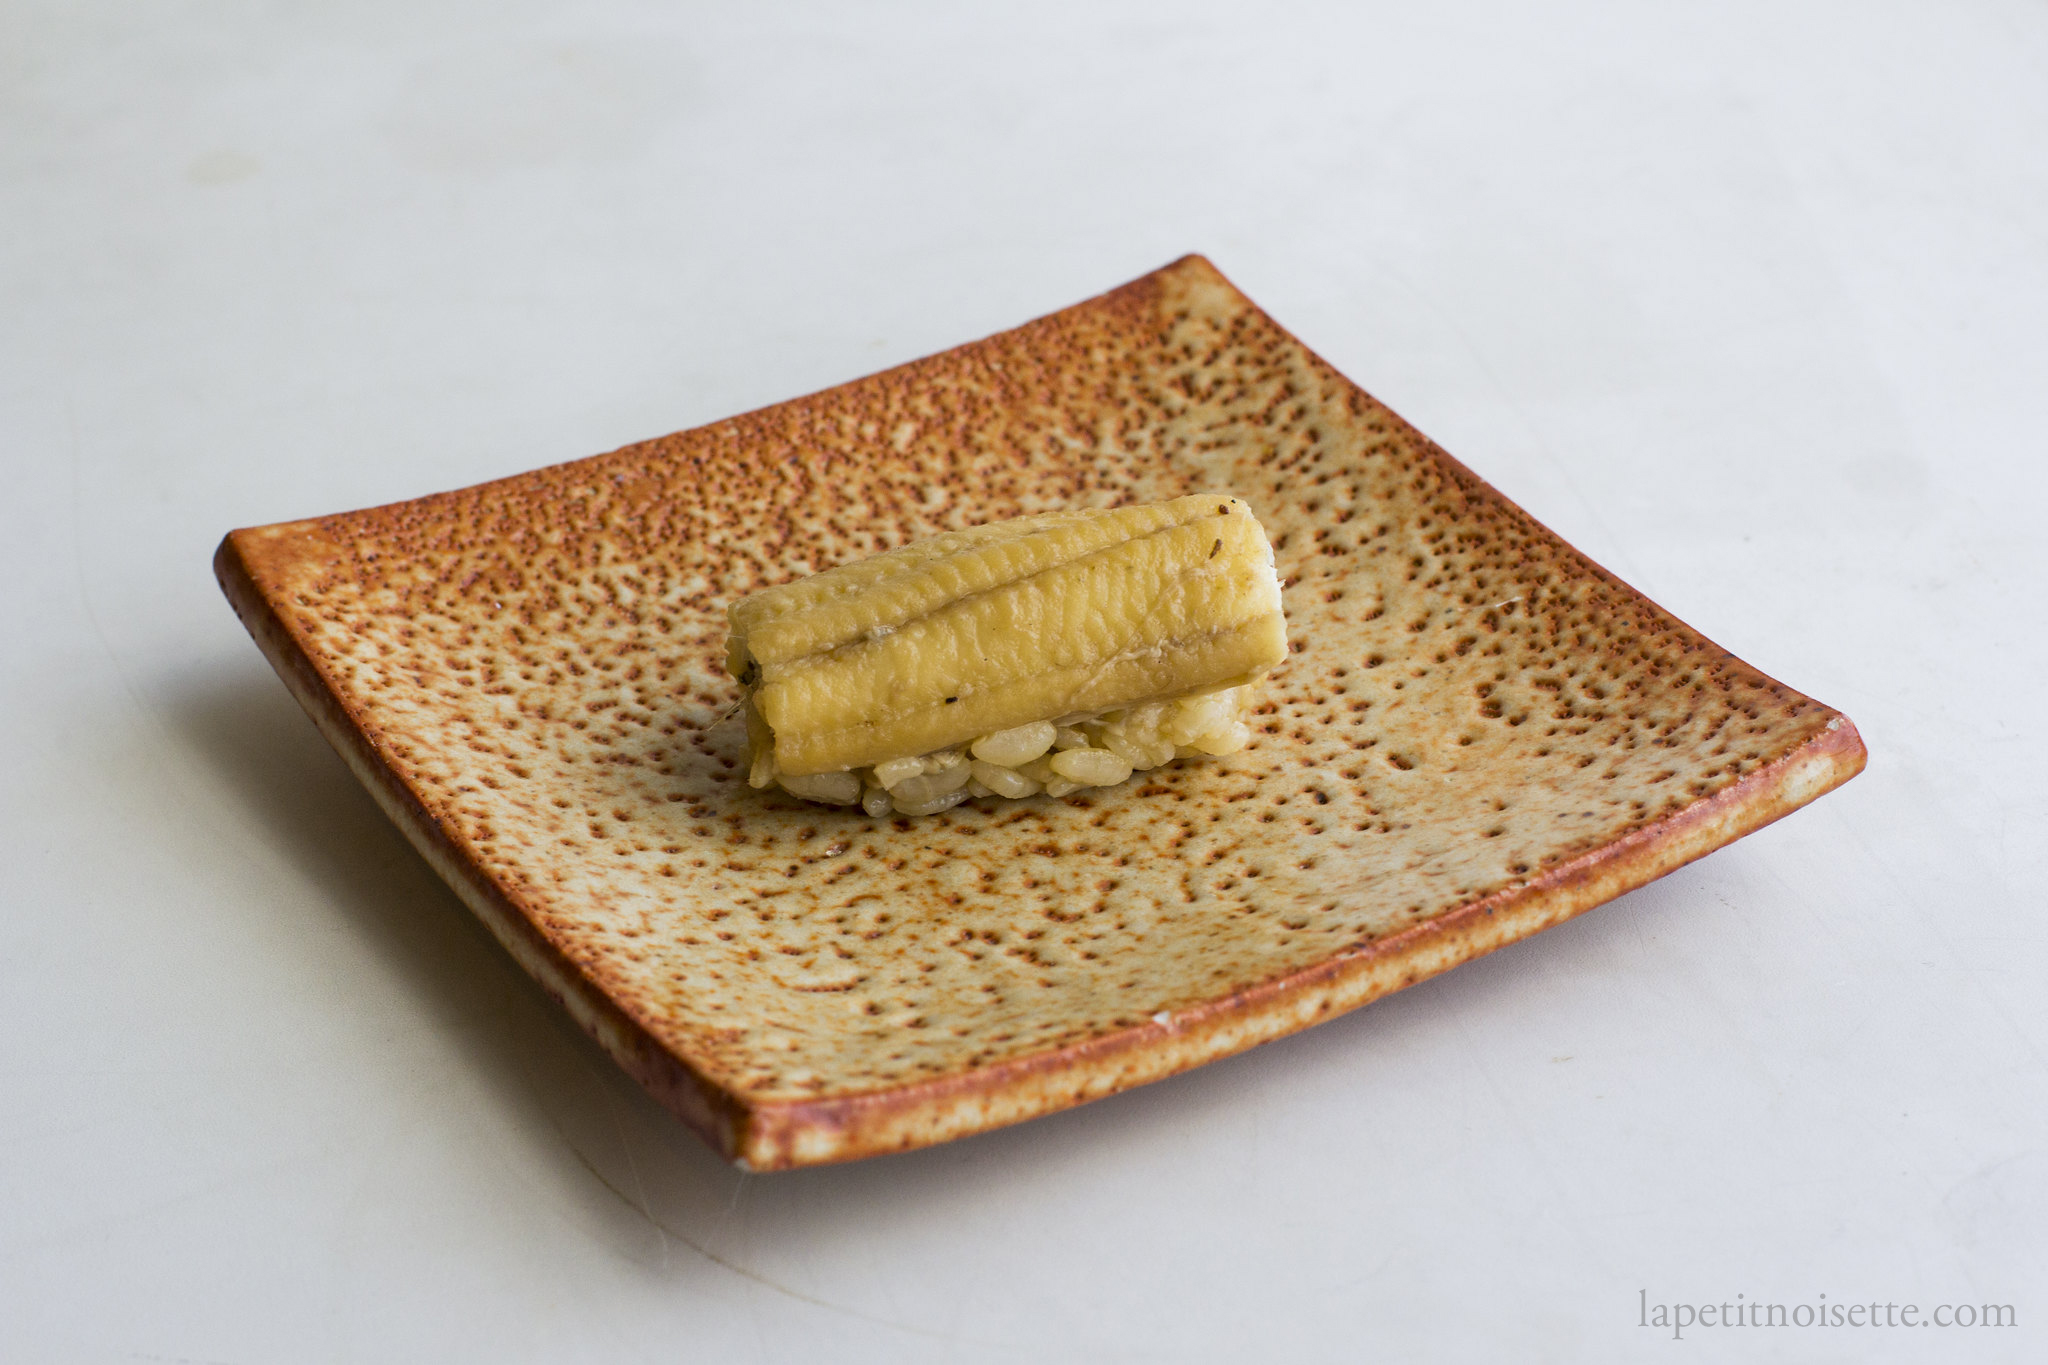 Anago Nigiri Sushi served on a ceramic tile.